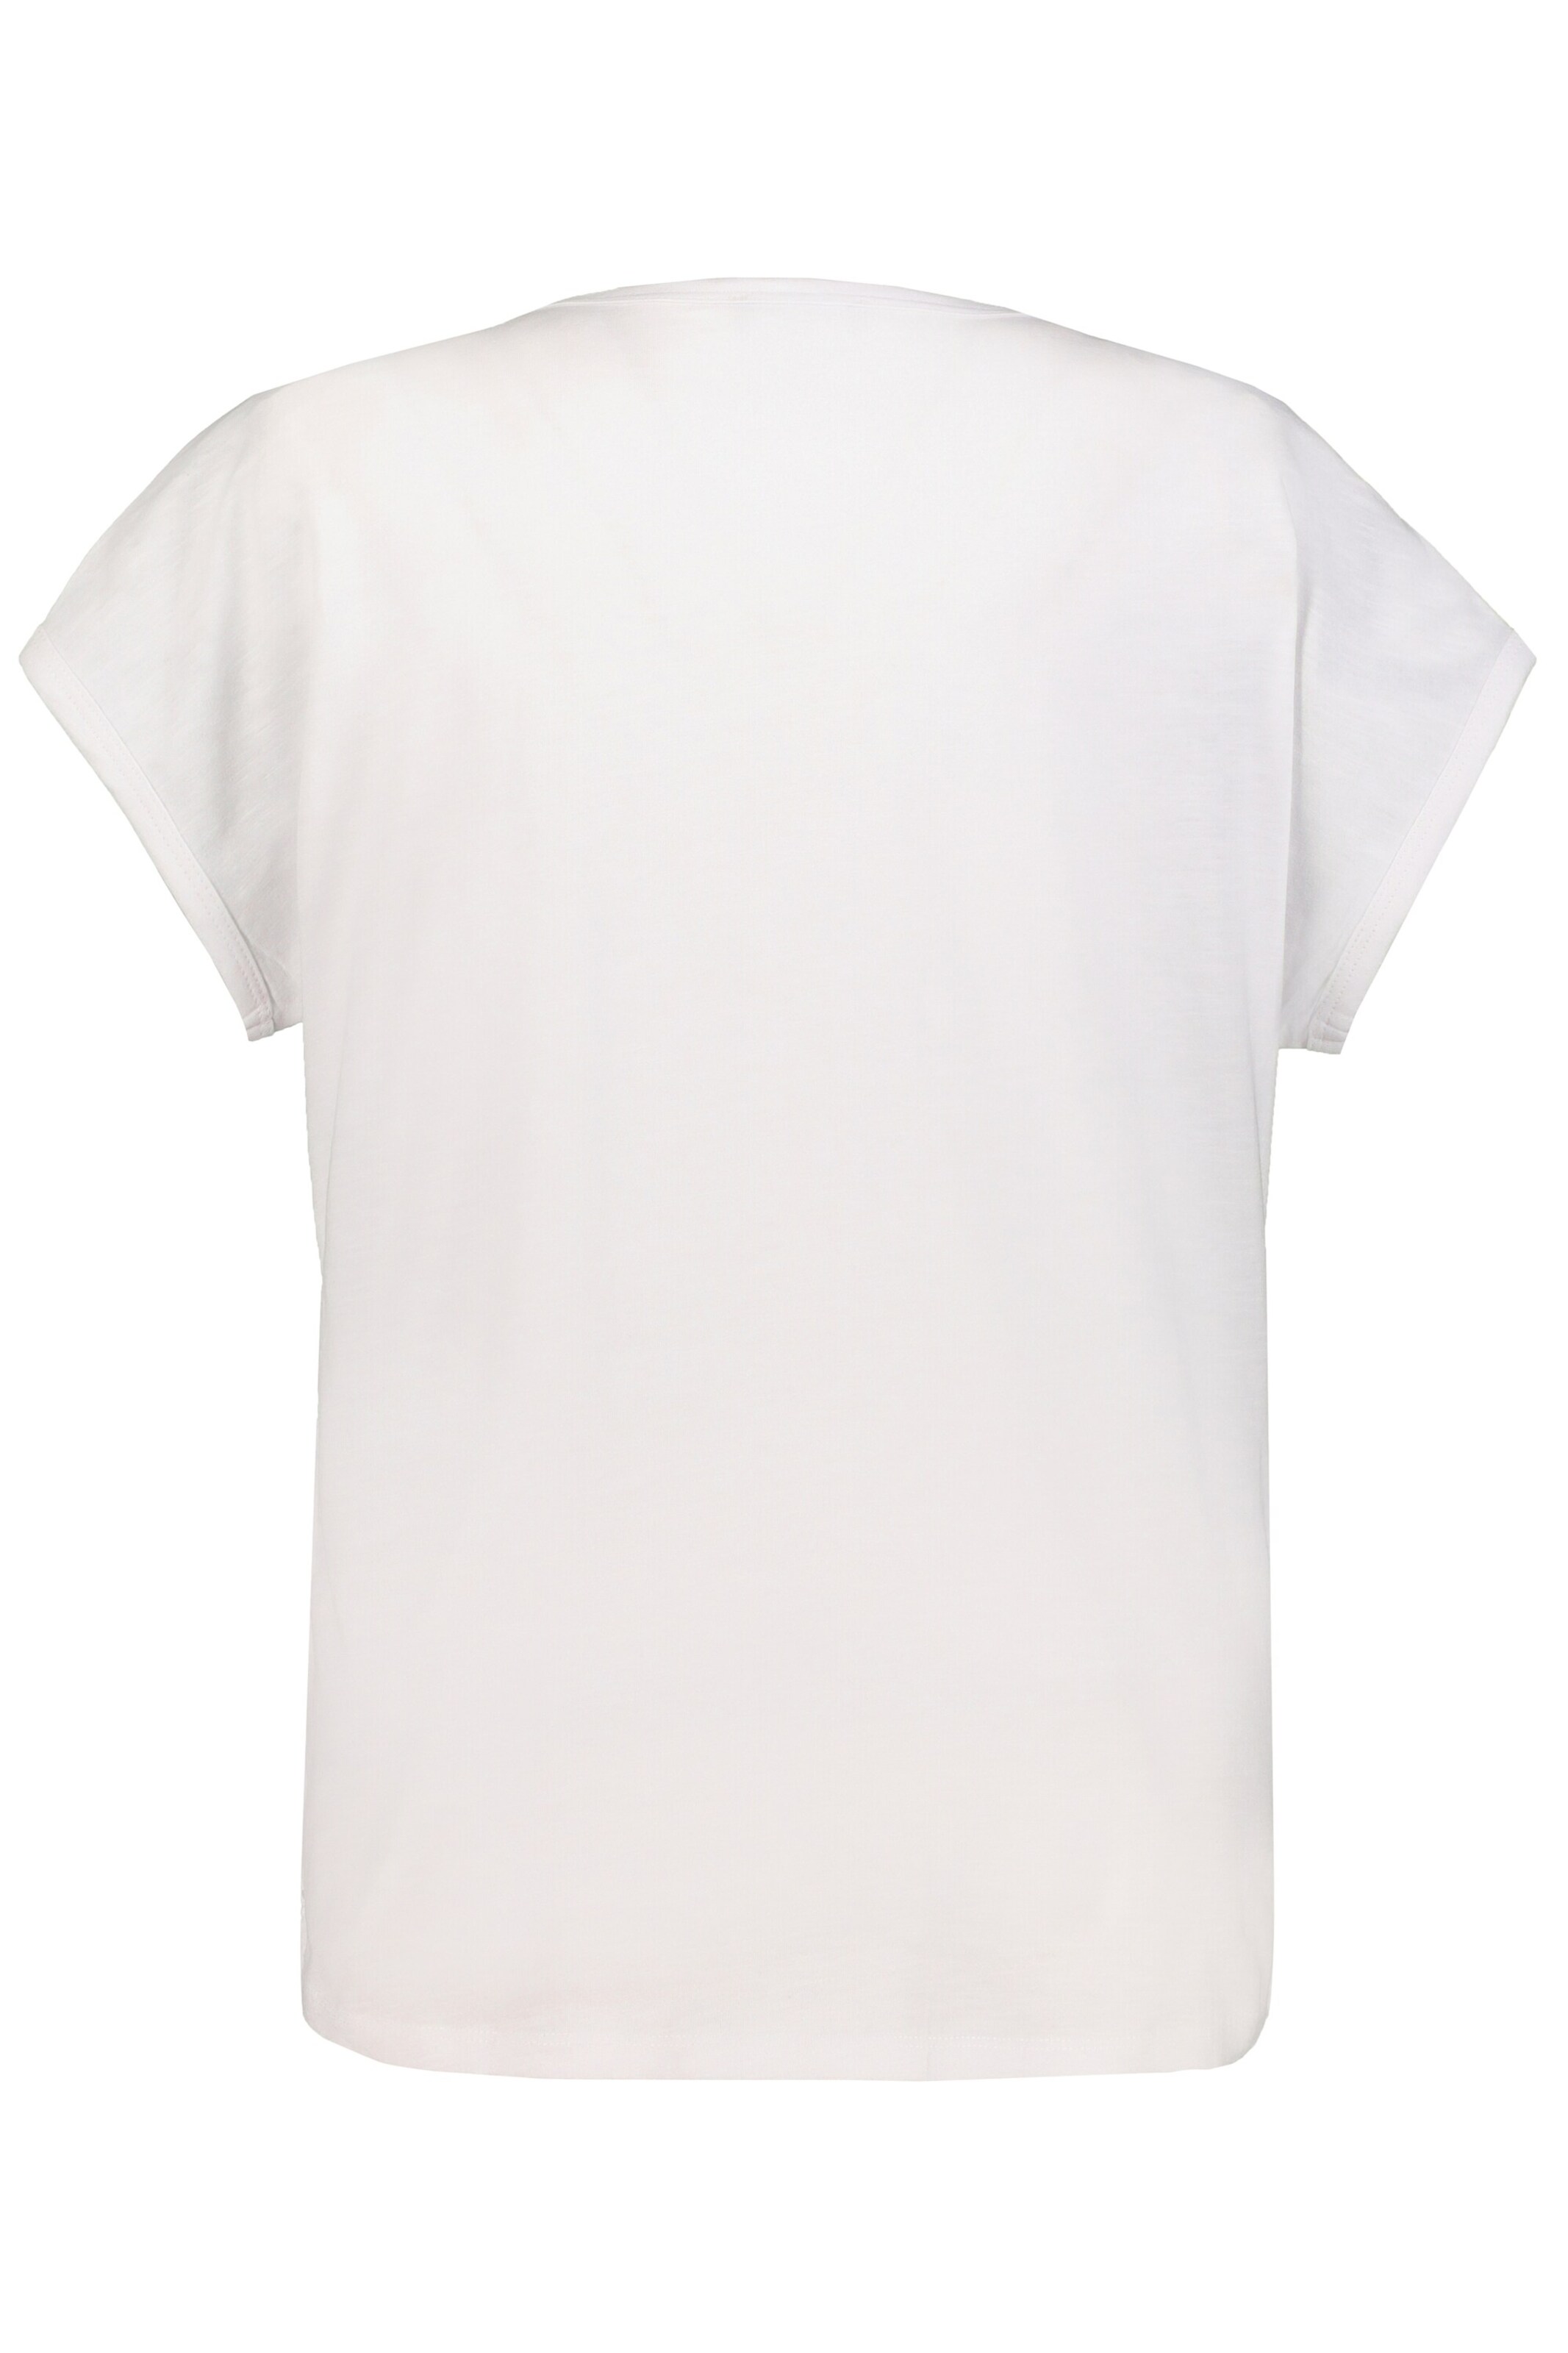 Frauen Shirts & Tops Gina Laura T-Shirt in Weiß - DN02245